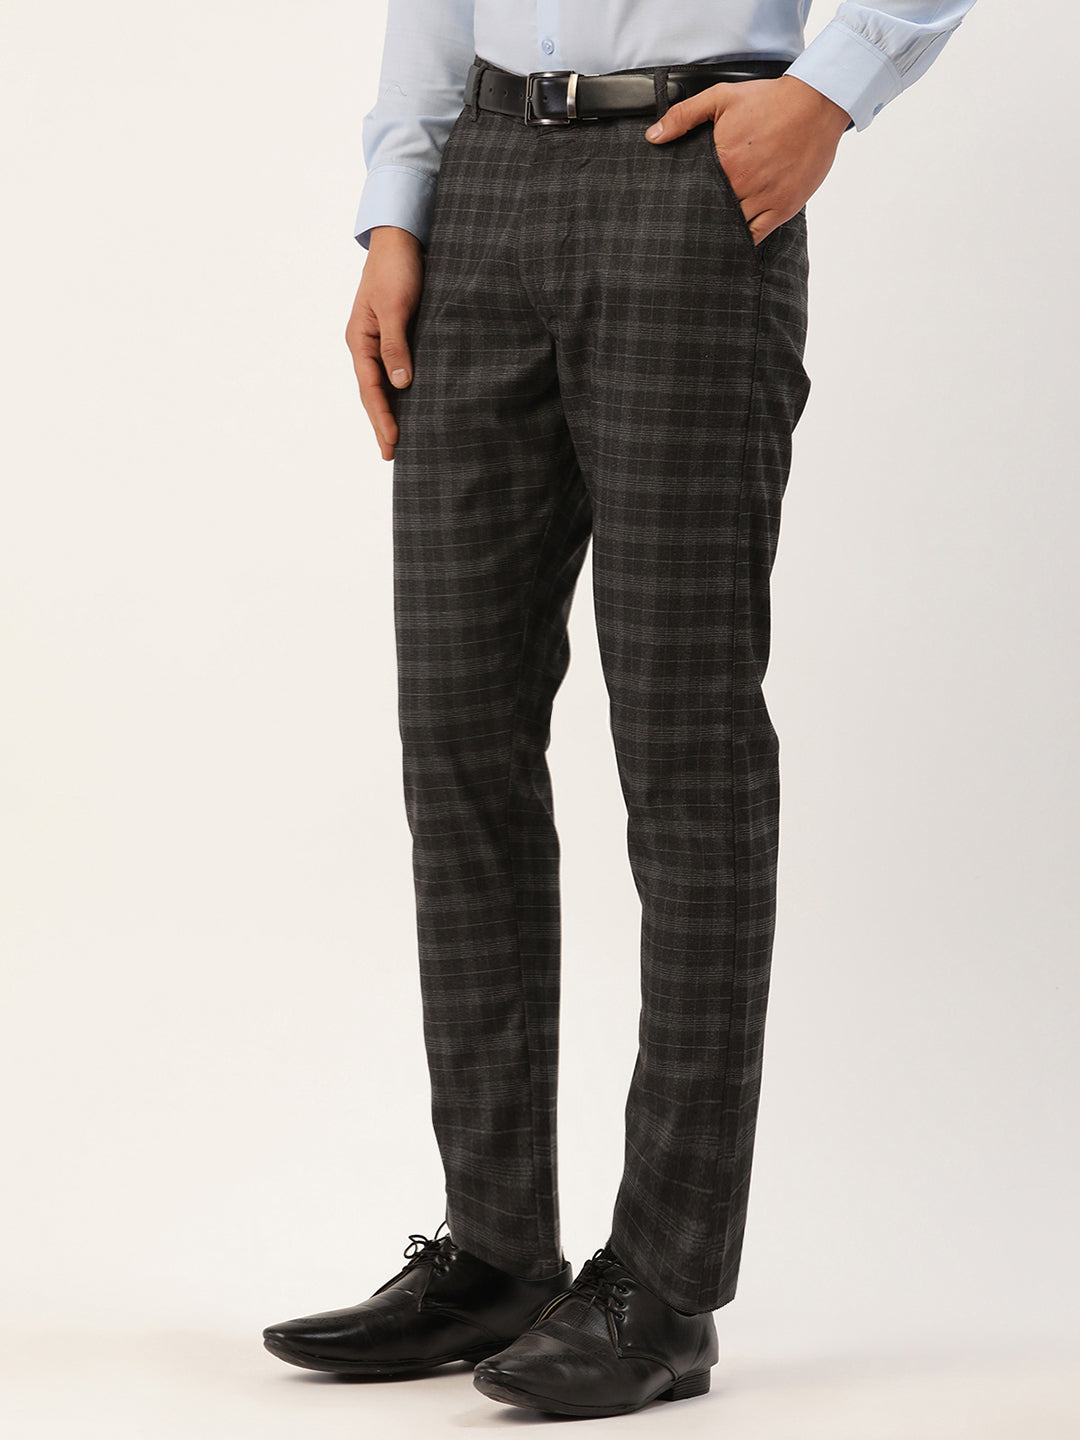 Men's Black Tartan Checked Formal Trousers ( FGP 271 Black ) - Jainish